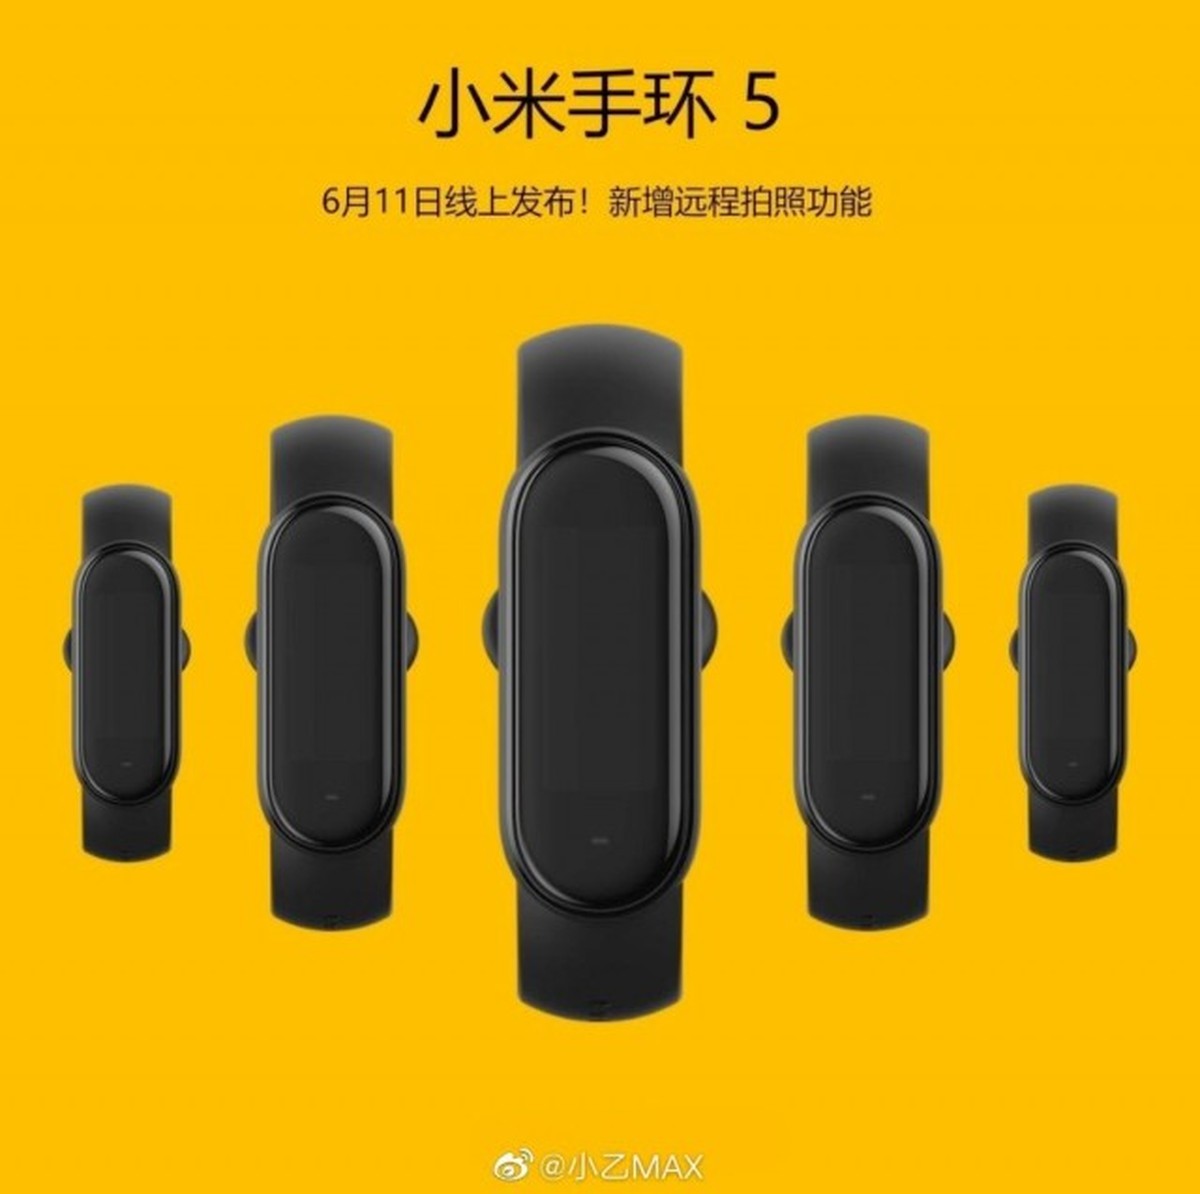 Mi Band 5: pulseira smart da Xiaomi ganha data de lançamento | Wearables – [Blog GigaOutlet]